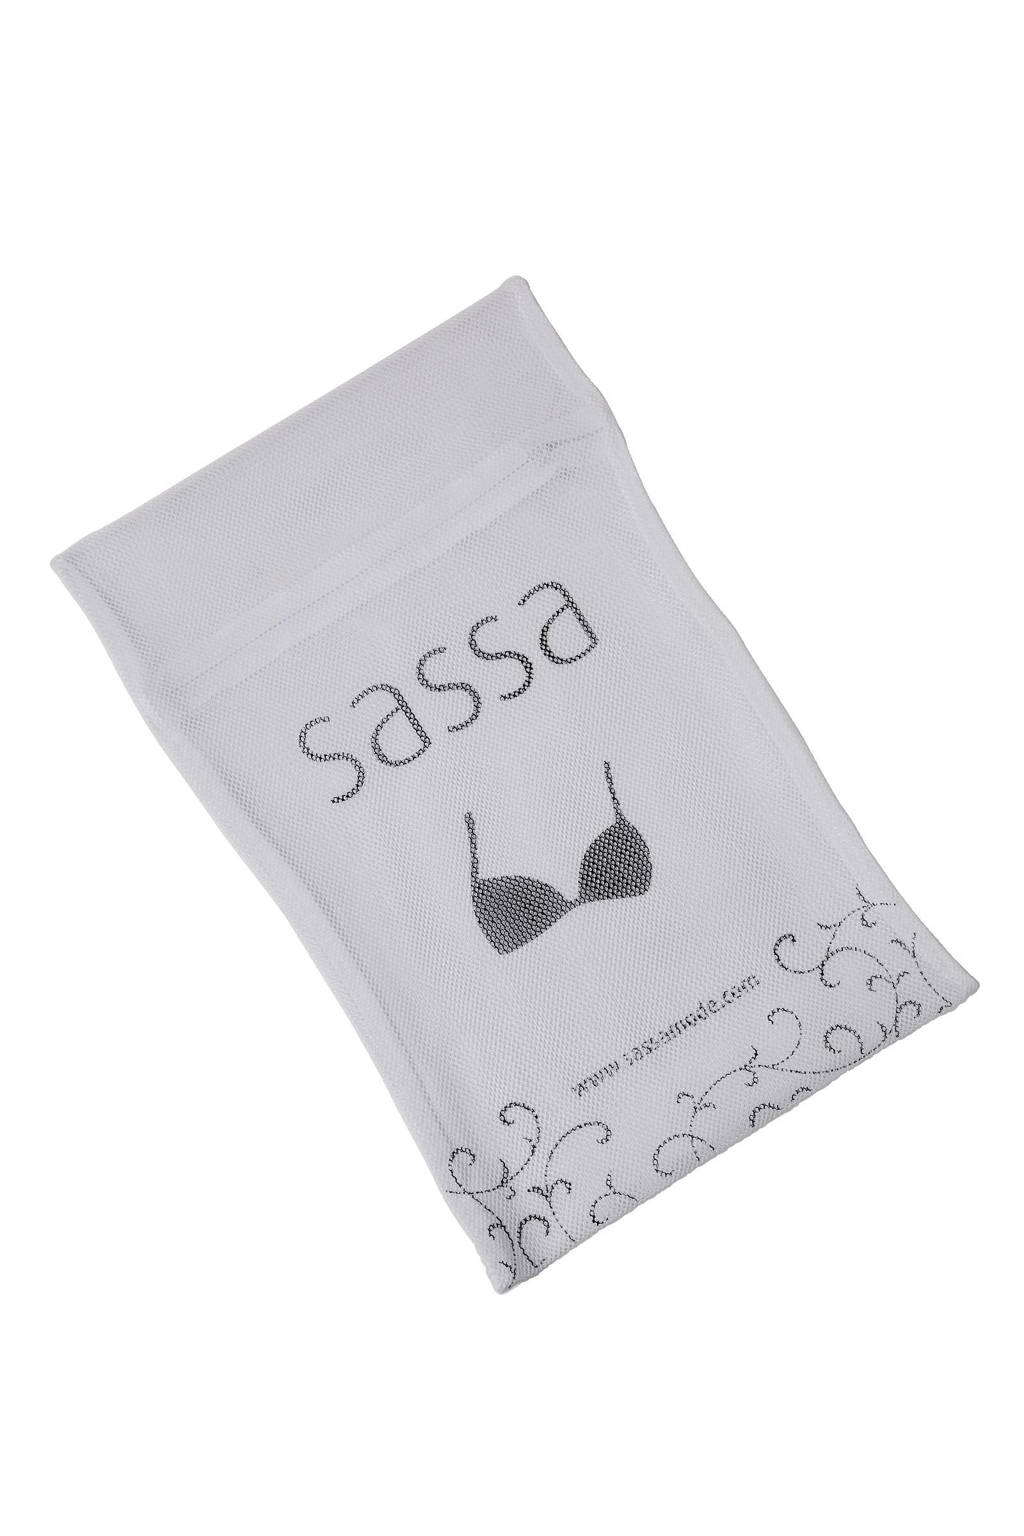 Sassa Mode waszakje, Wit/zwart